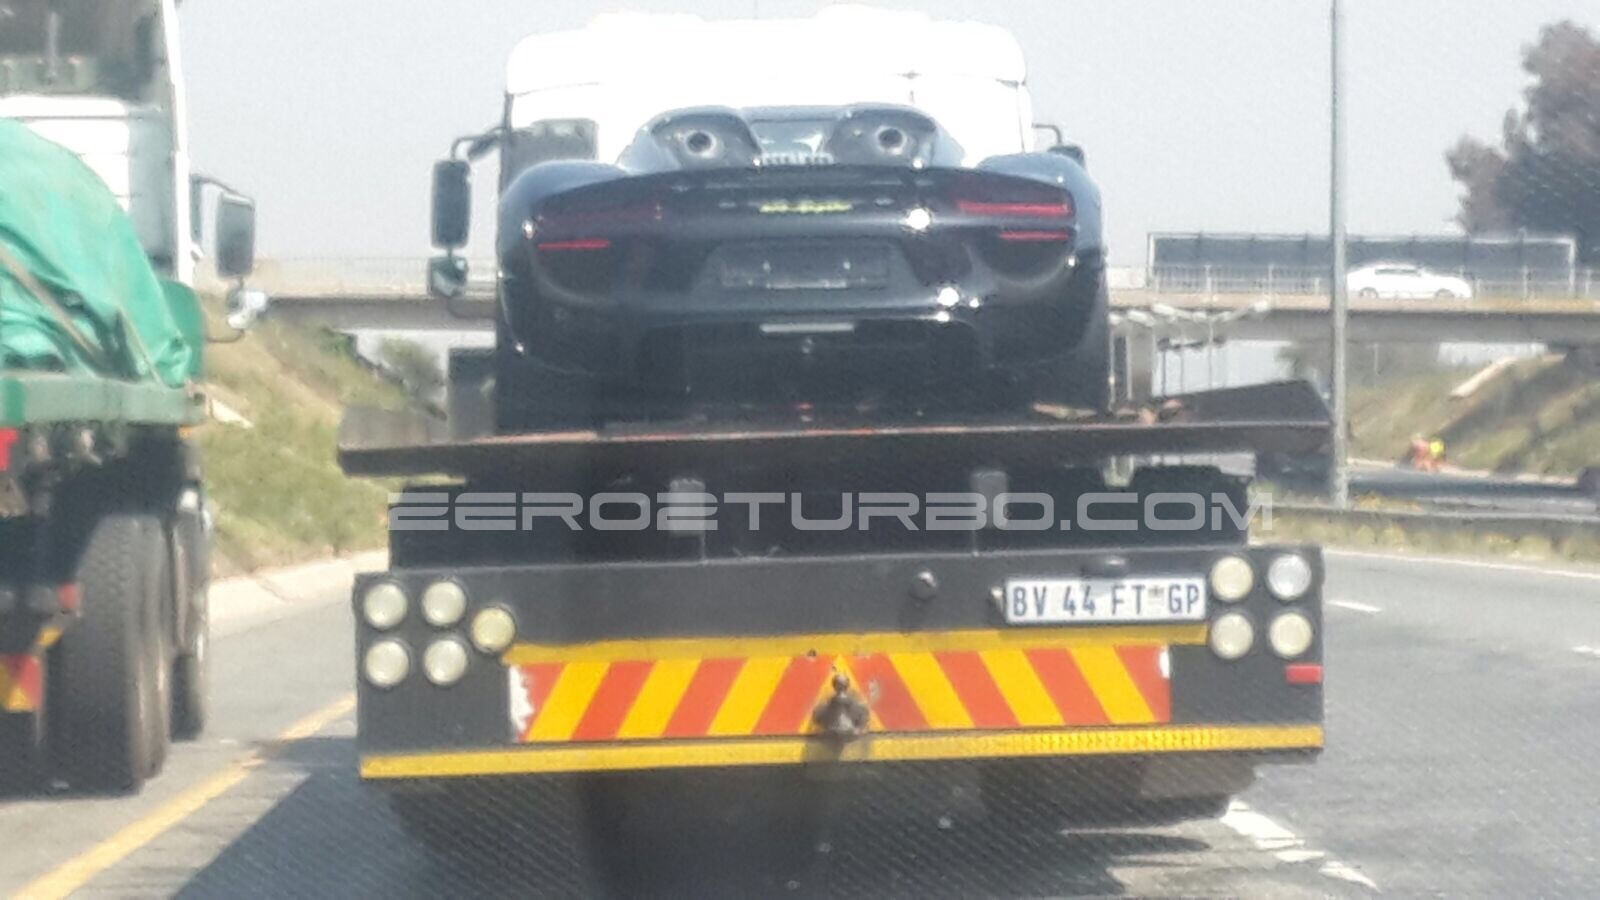 New Black Porsche 918 Spyder Arrives In South Africa